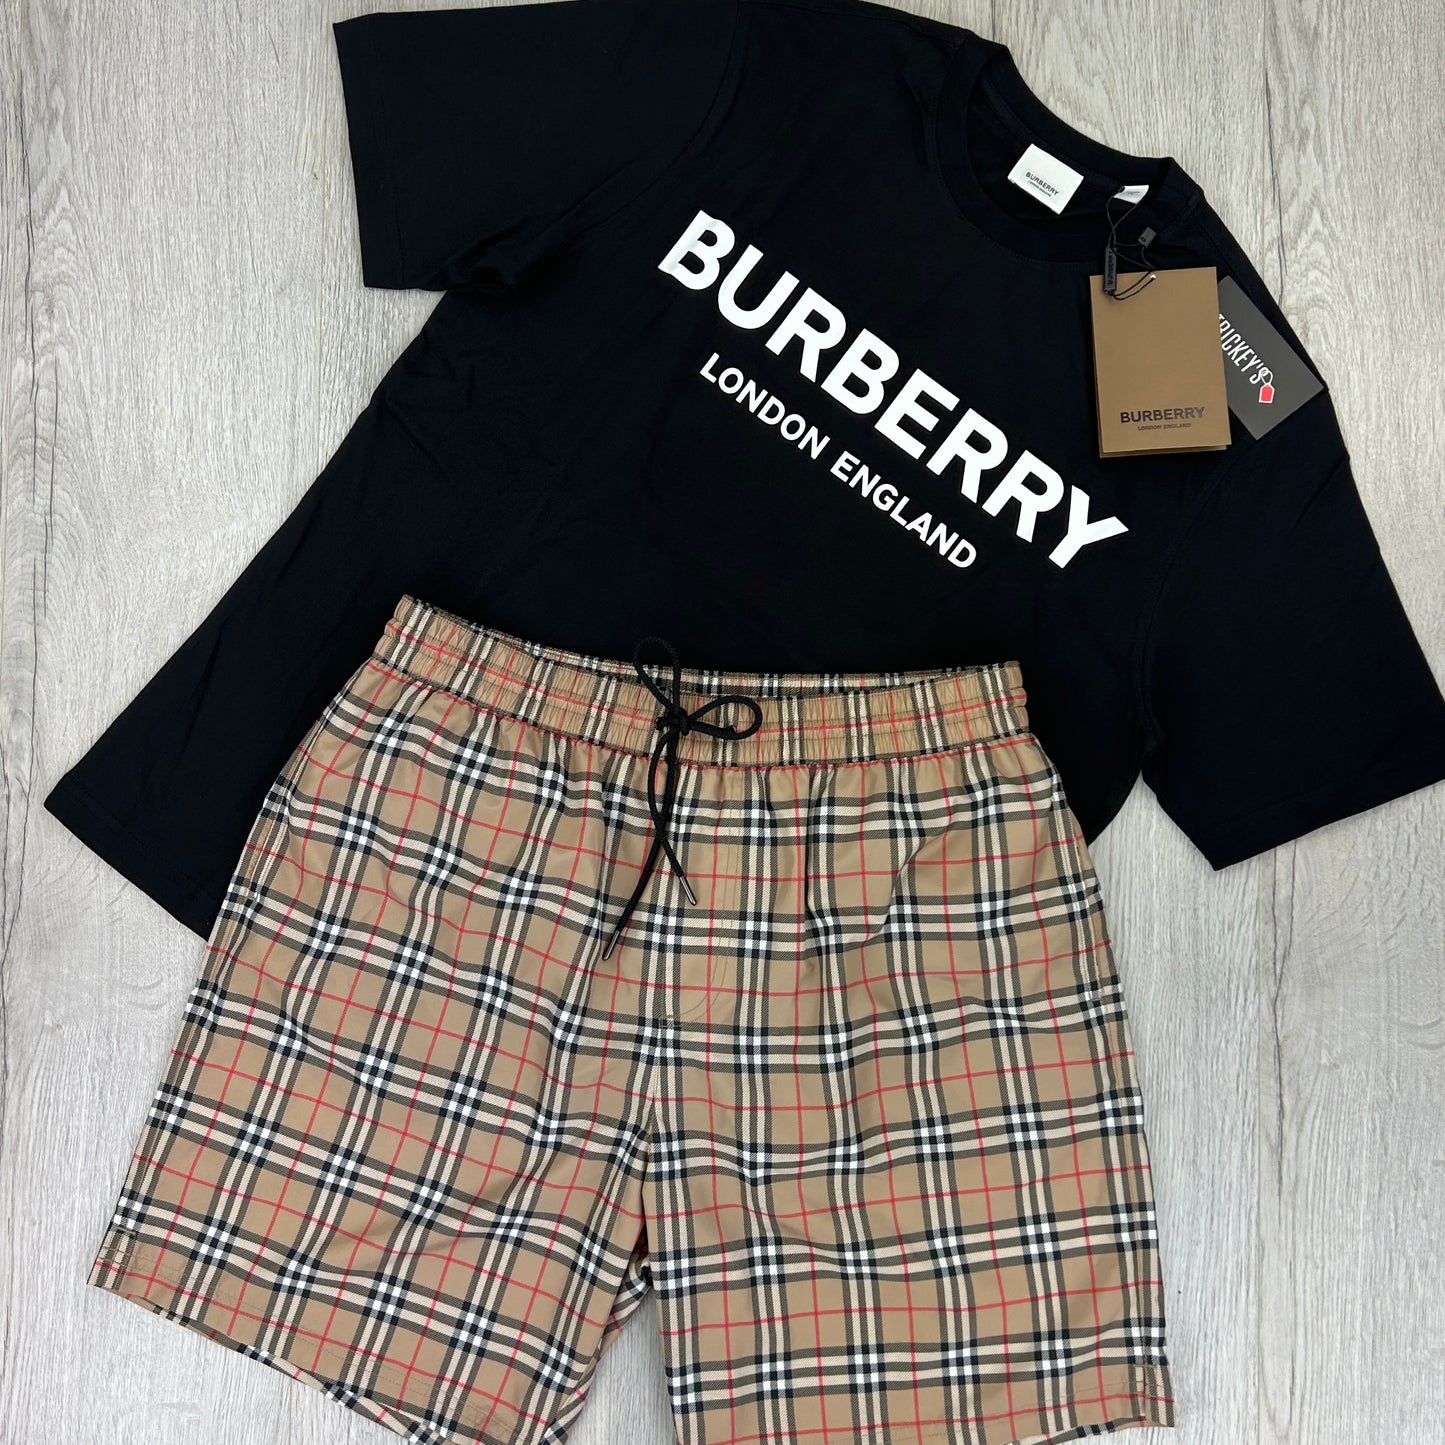 Burberry Men’s Black T-shirt & Beige Small Check Swim Short Set